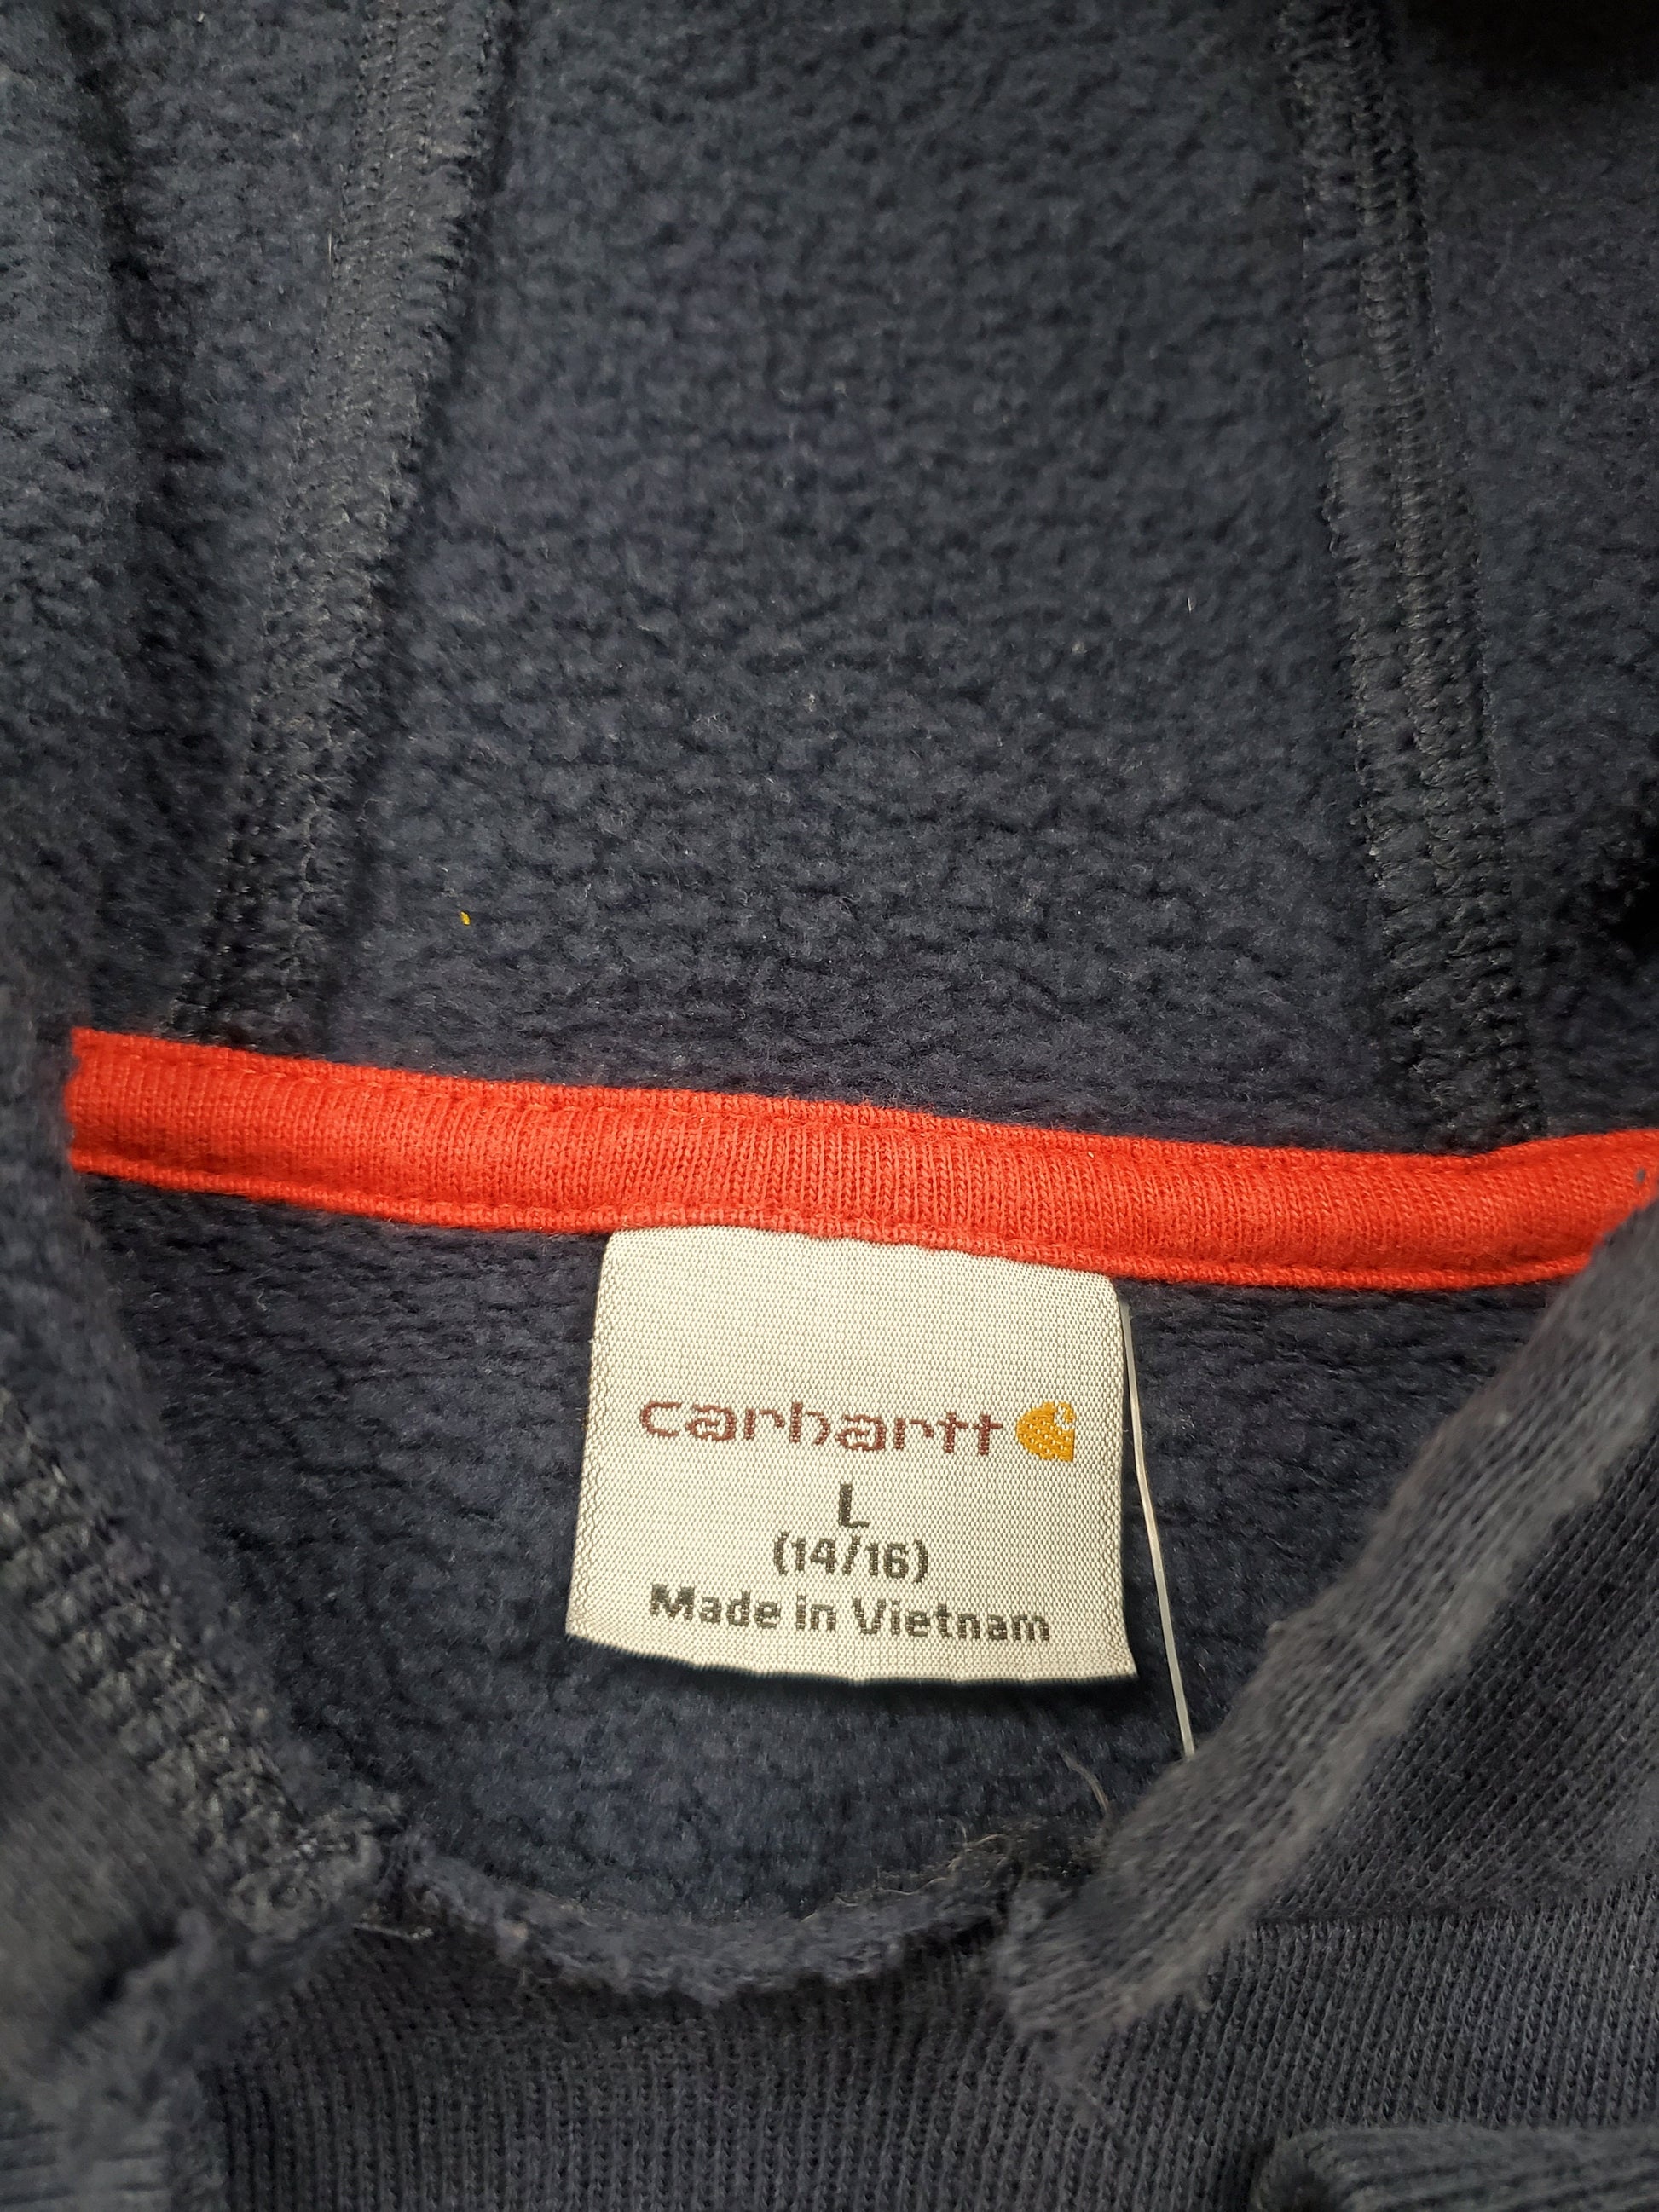 2010s Carhartt Arm Spellout Hoodie Sweatshirt Size S